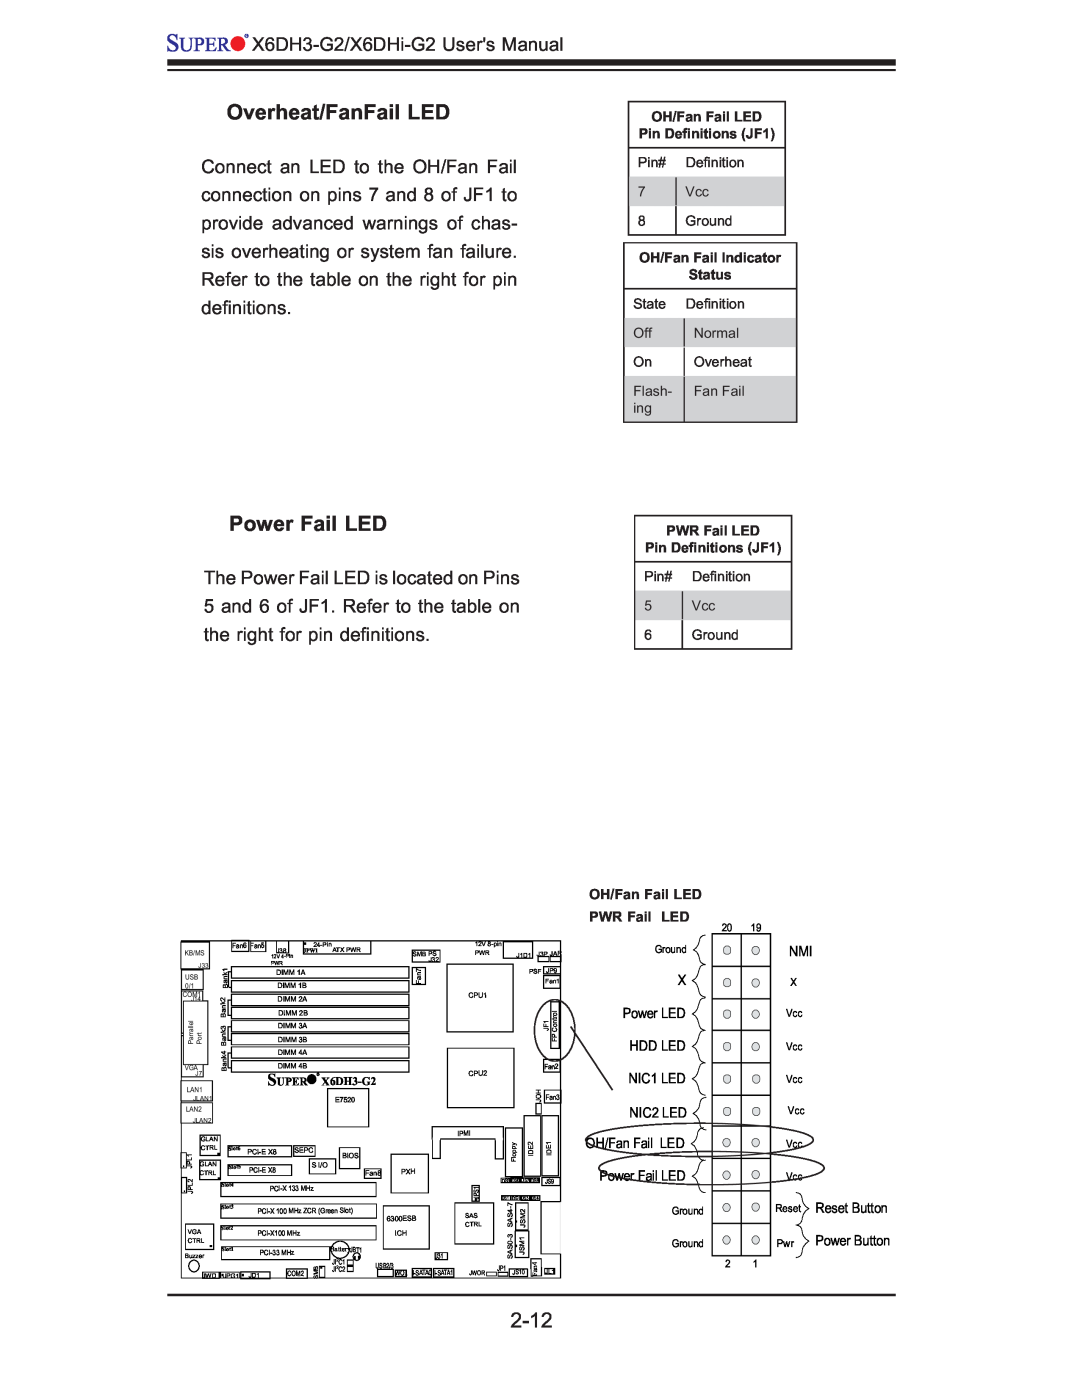 SUPER MICRO Computer X6DHi-G2, X6DH3-G2 Overheat/FanFail LED, Power Fail LED, 2-12, OH/Fan Fail LED Pin Deﬁnitions JF1 